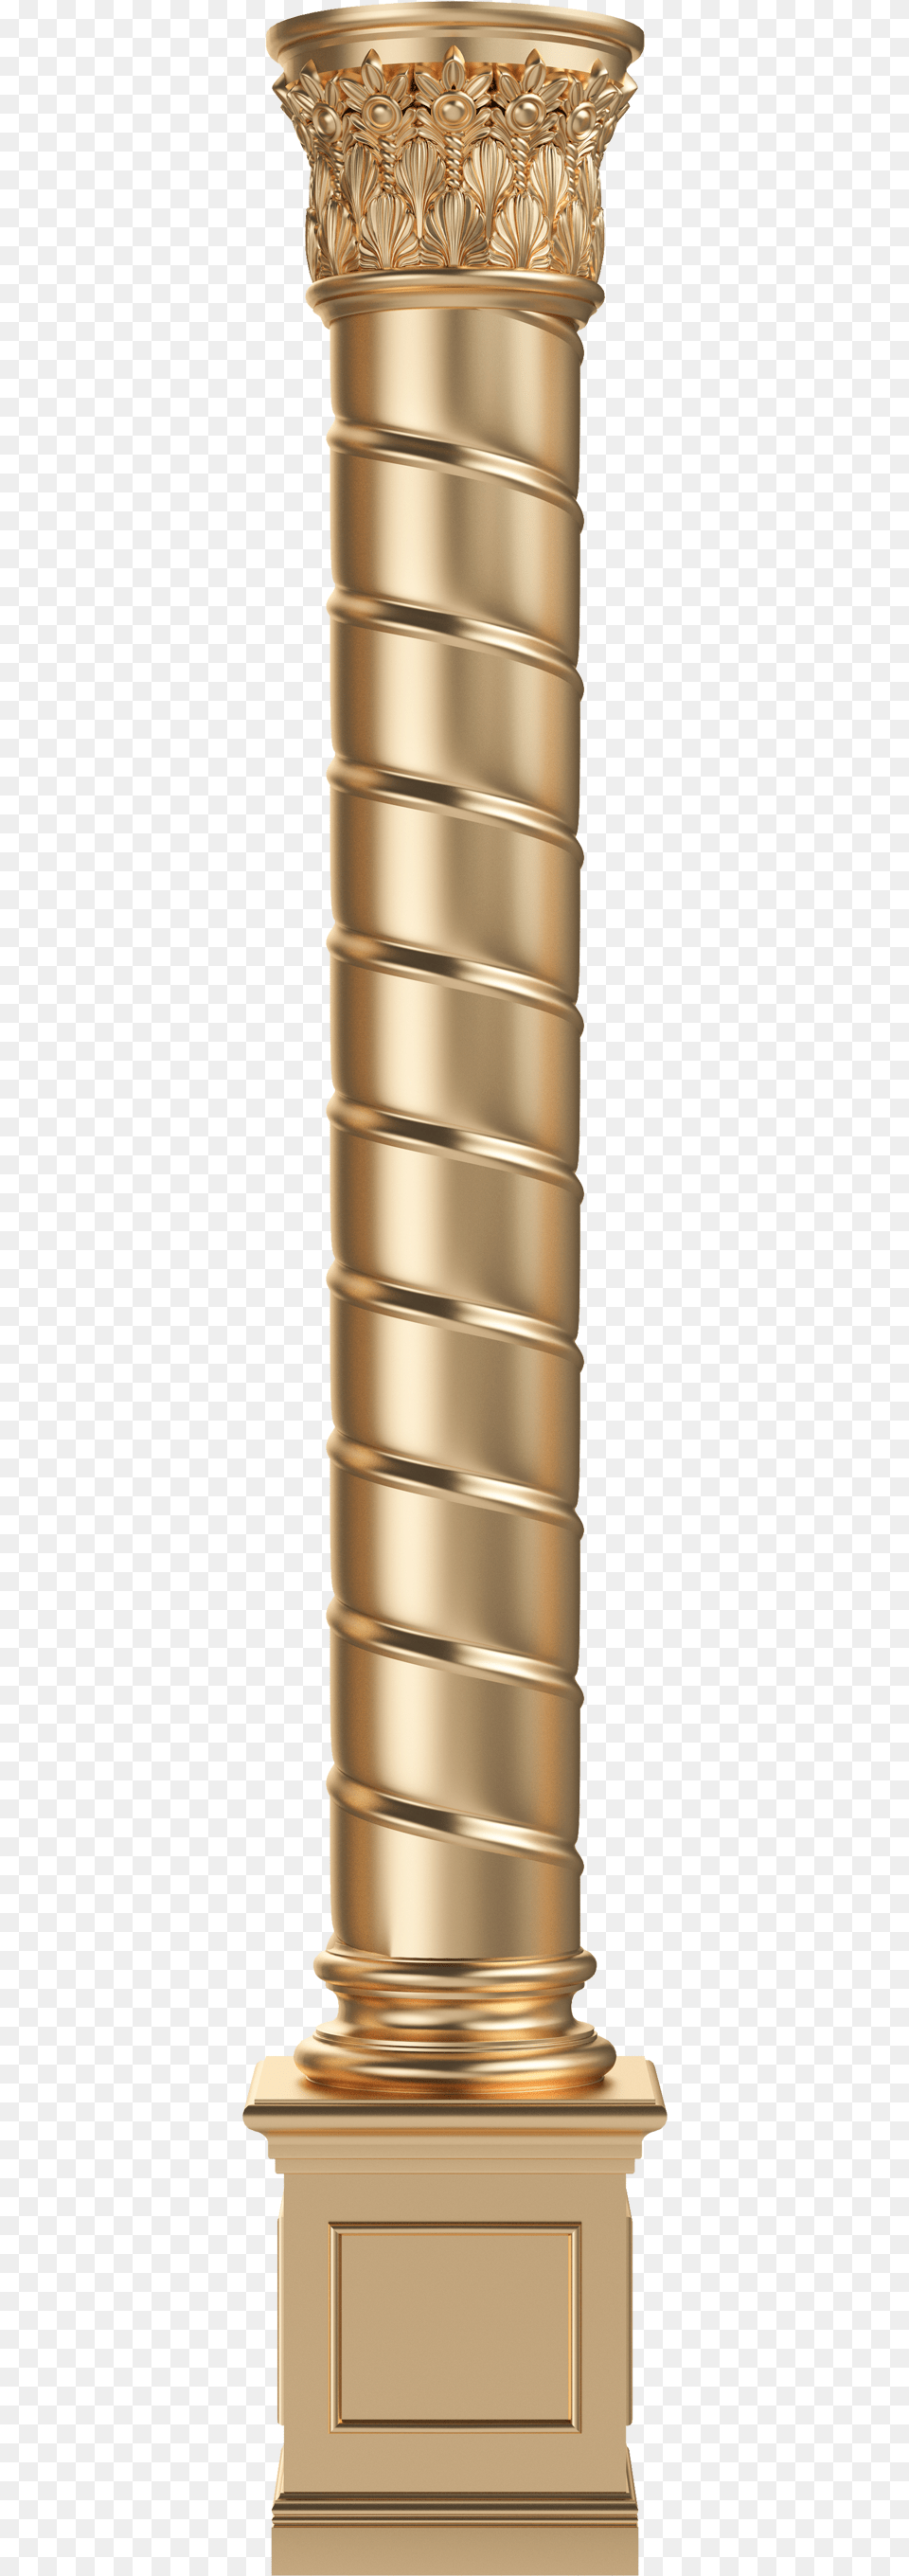 Column Gold European Columns Transprent Free Pillar, Architecture Png Image